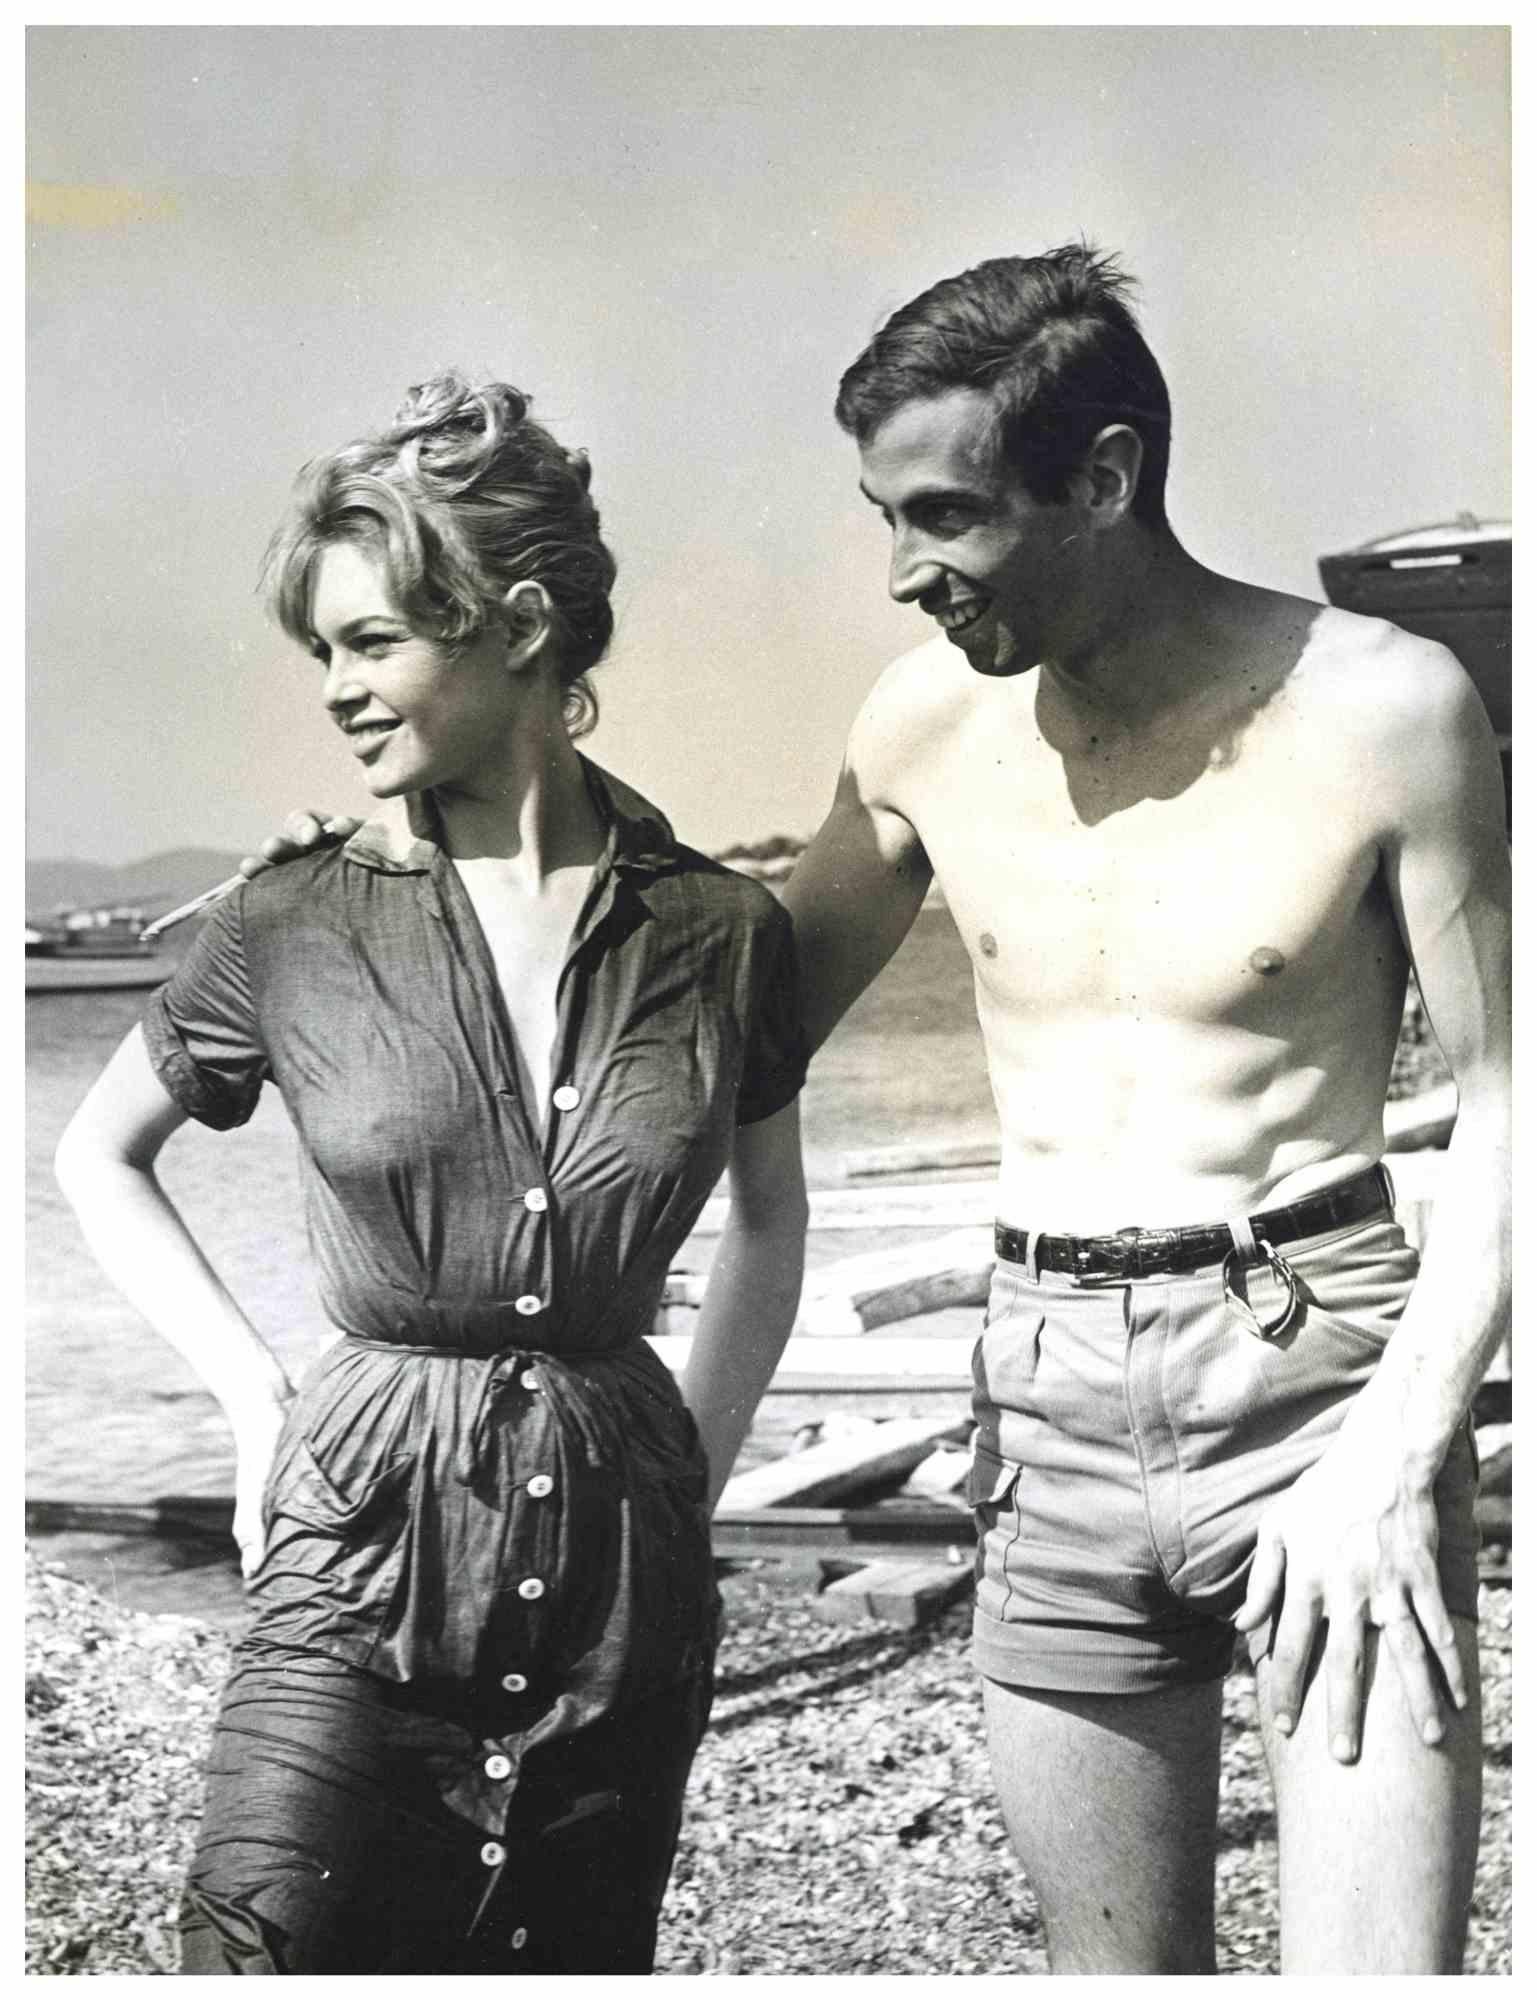 Antonio Pantano Portrait Photograph - Brigitte Bardot and Roger Vadim - Vintage Photograph - 1960s